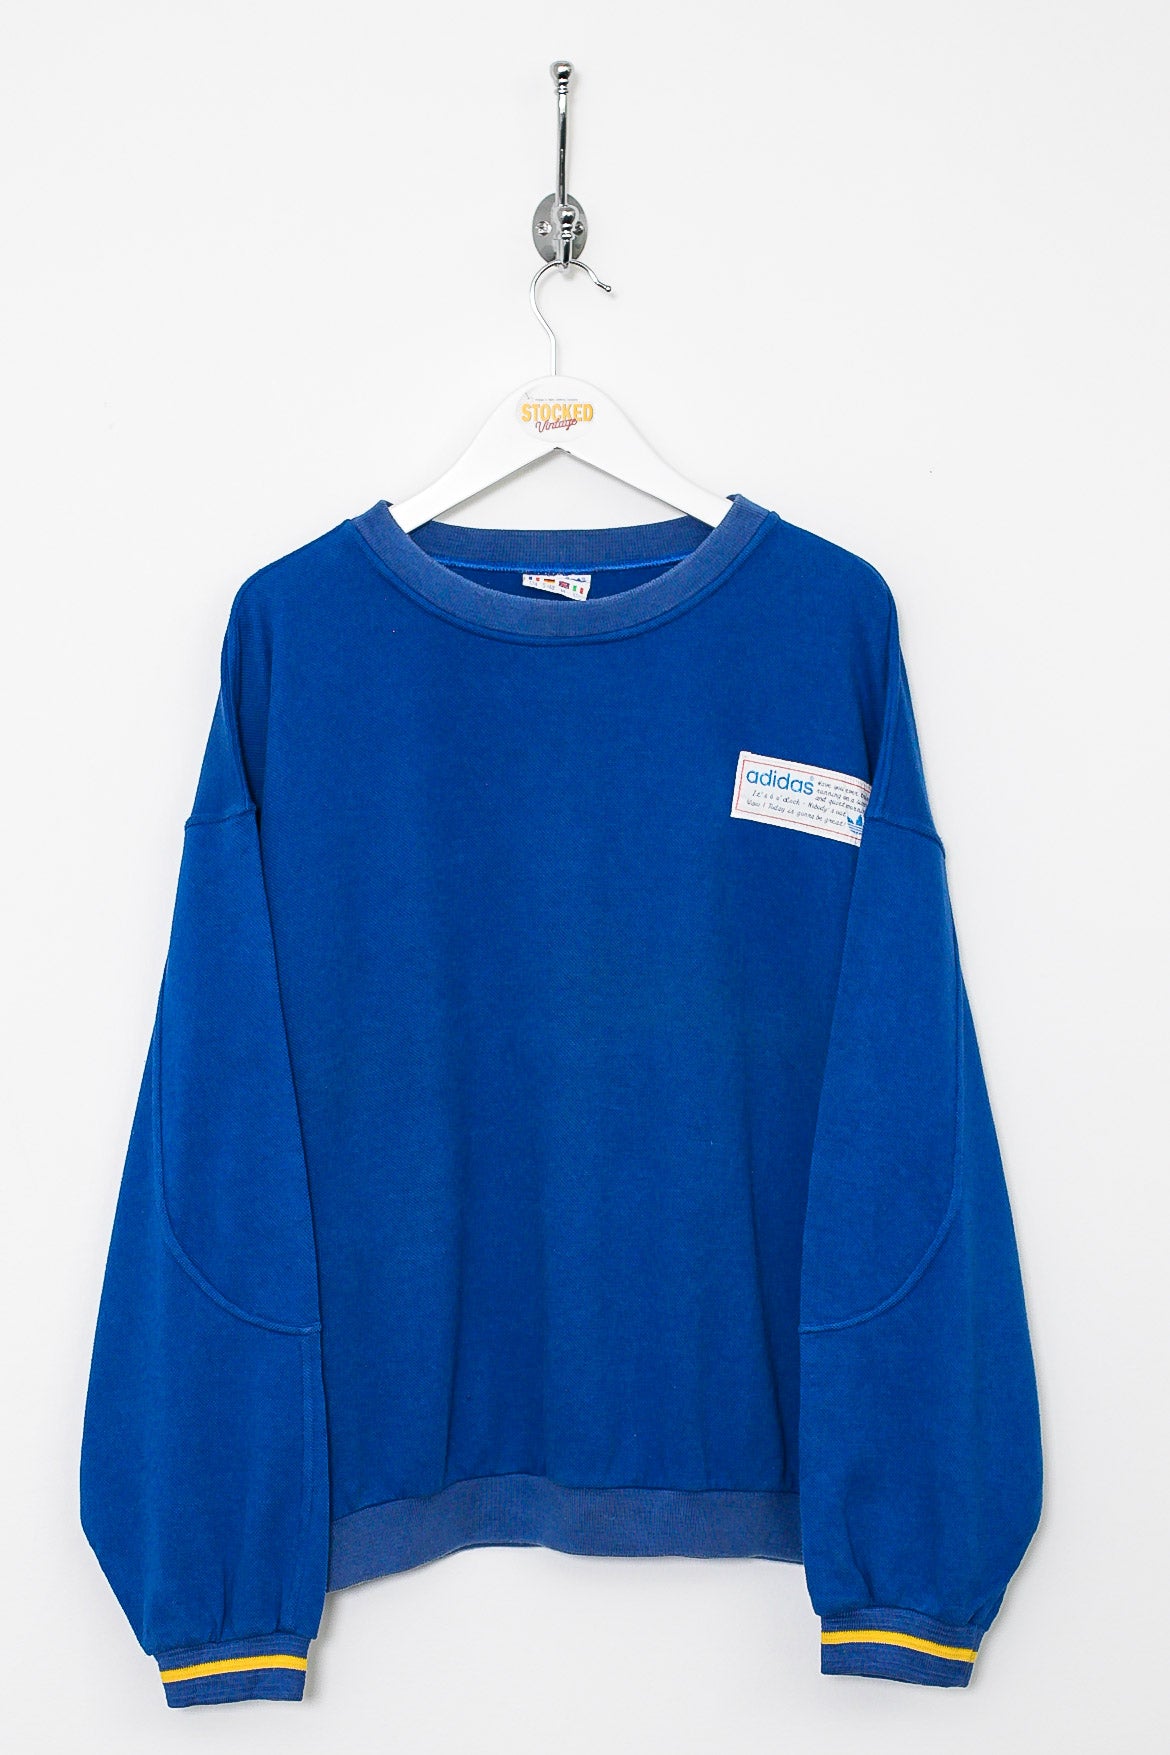 80s Adidas Sweatshirt (M)